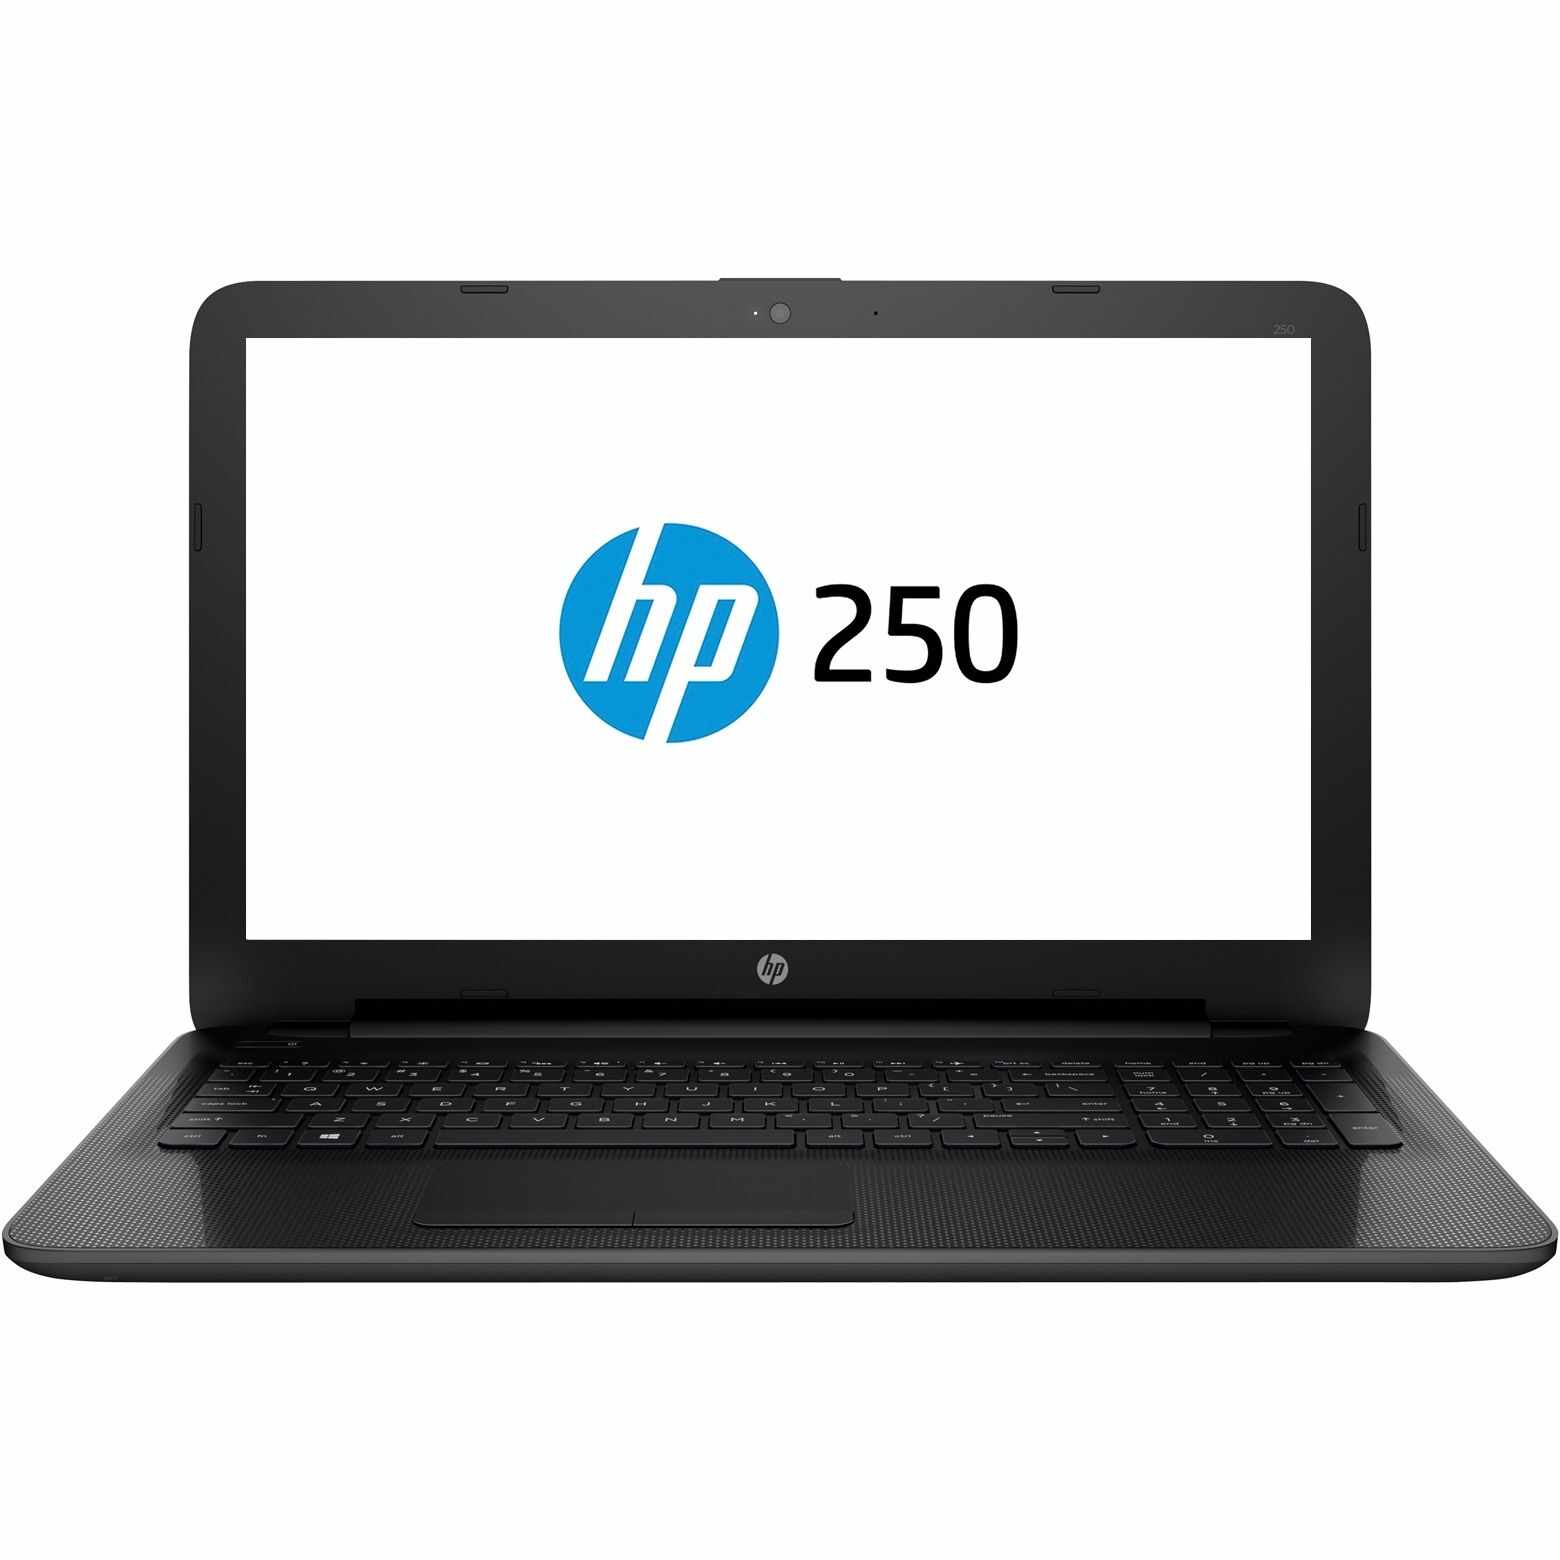 Laptop HP 250 G4, Intel Core i5-6200U 2.30GHz, 4GB DDR3, 120GB SSD, DVD-RW, 15.6 Inch, Tastatura Numerica, Webcam, Grad B (0014)